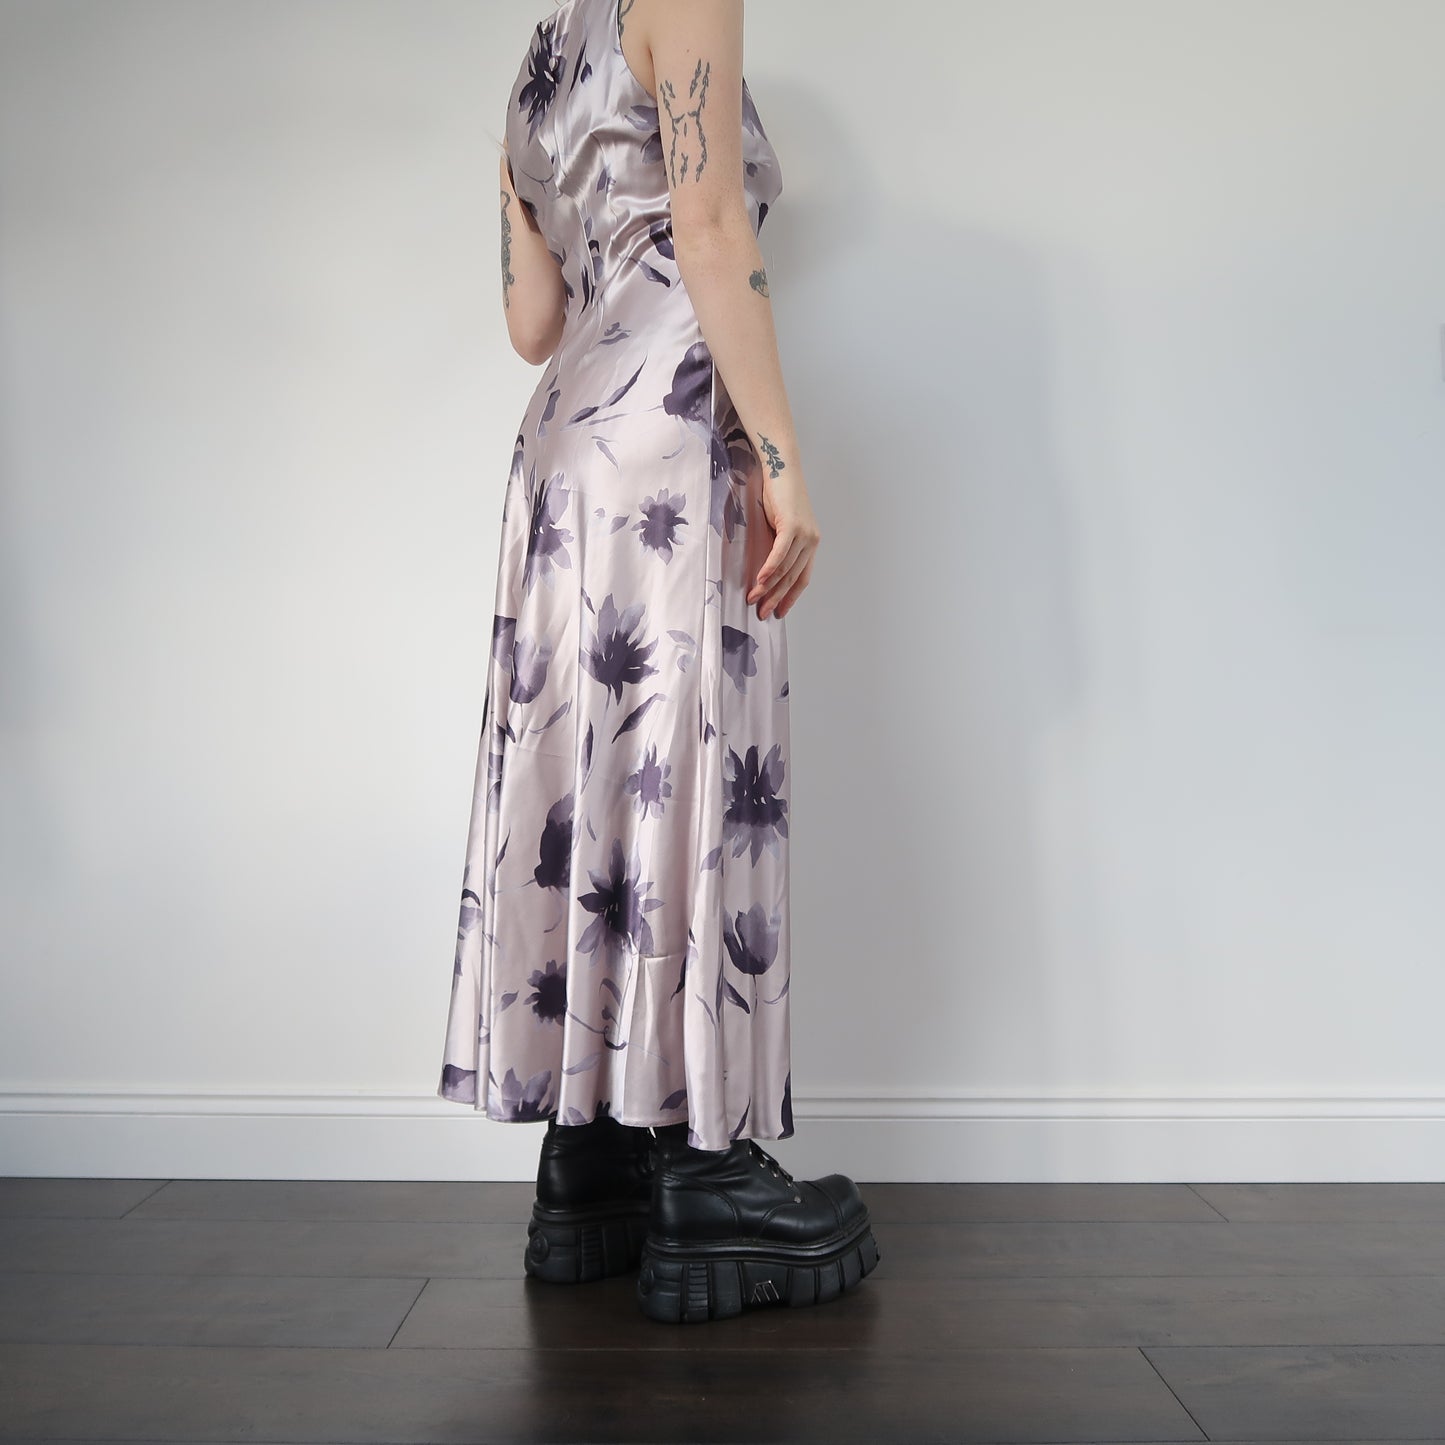 Silky floral dress - size 10